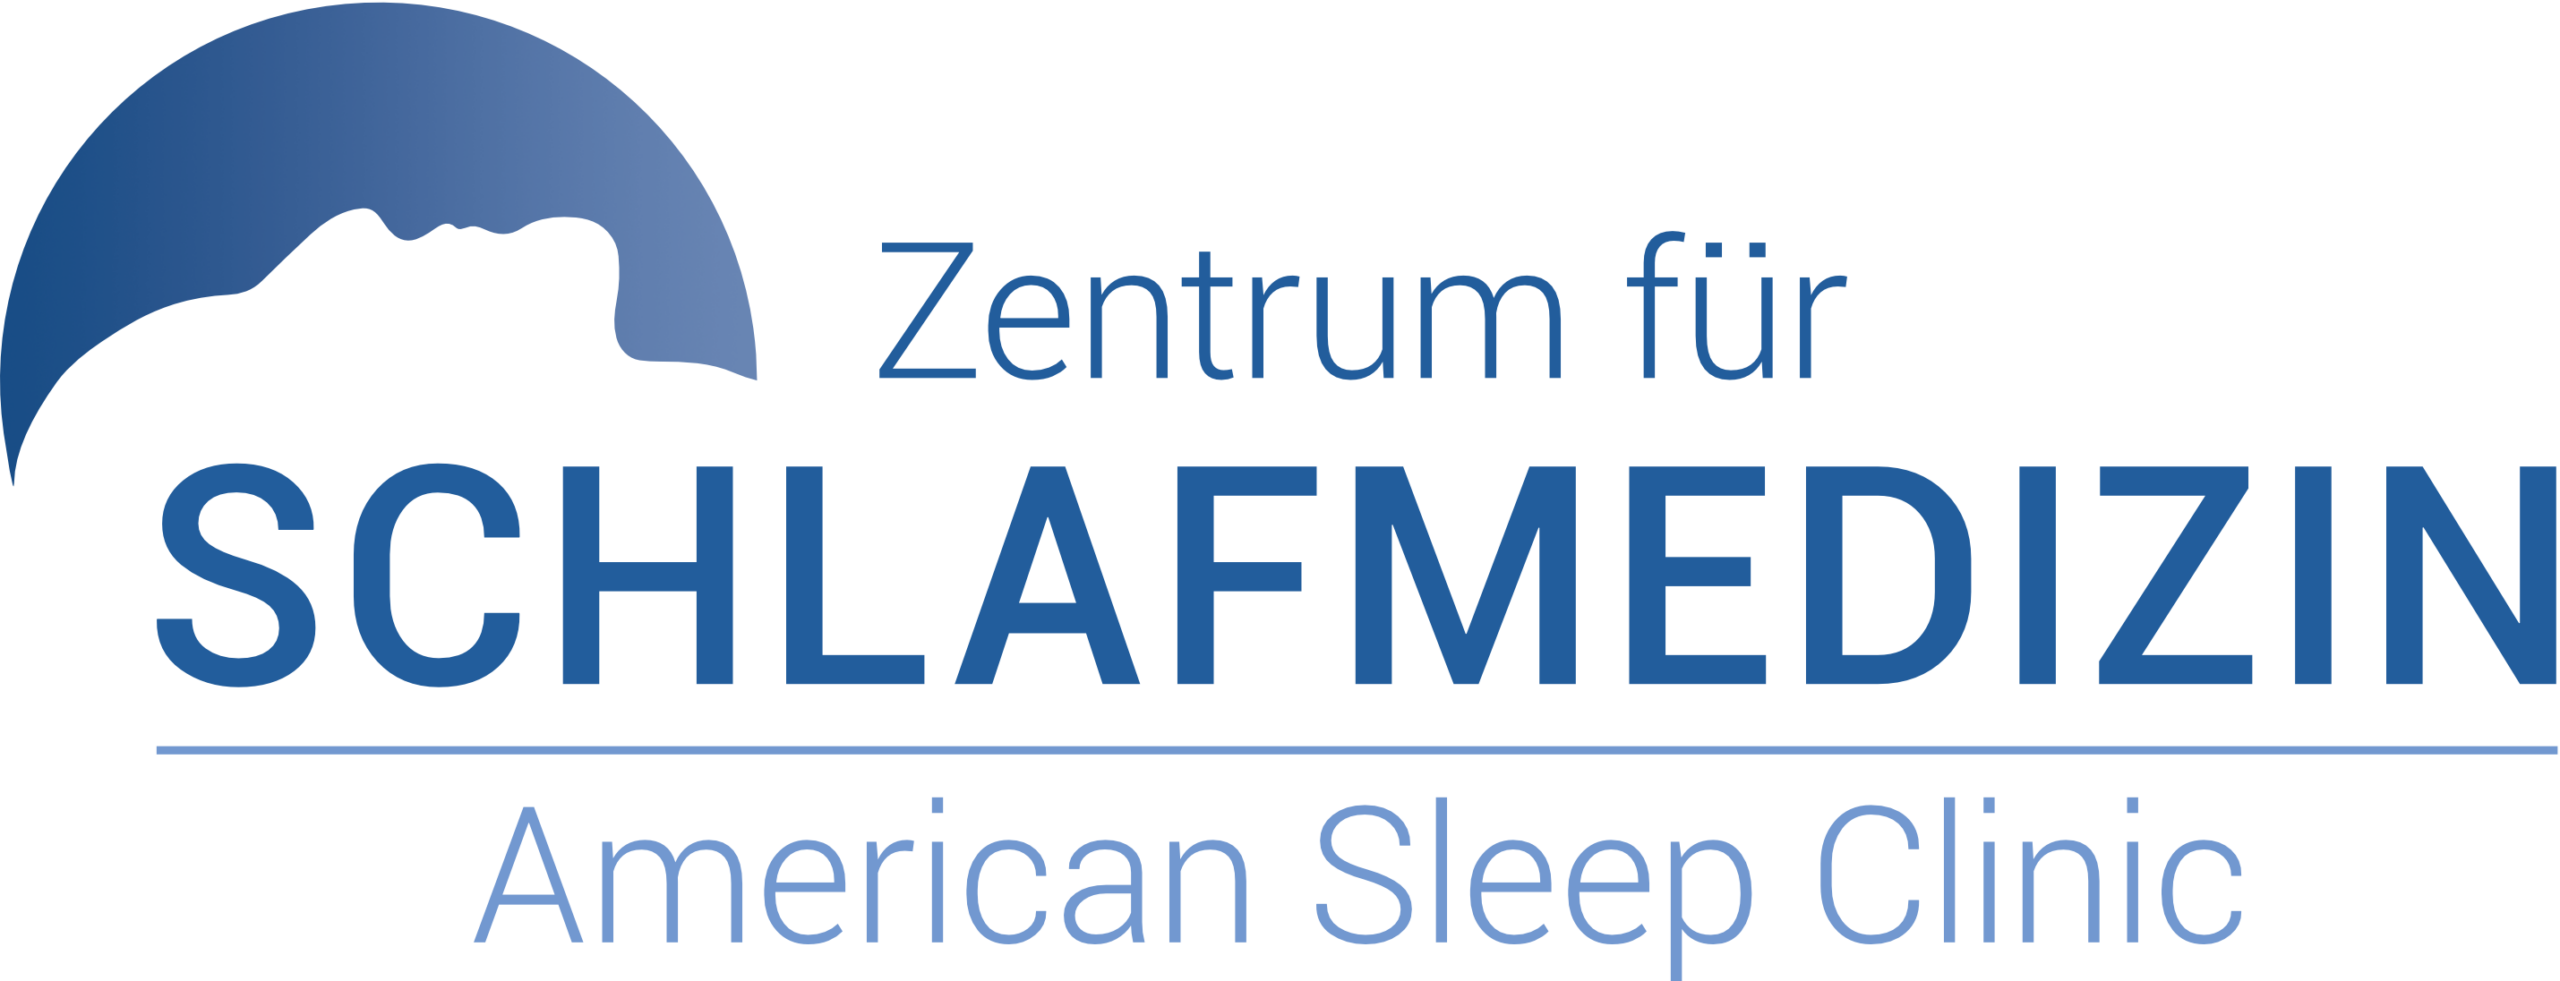 (c) American-sleep-clinic.com